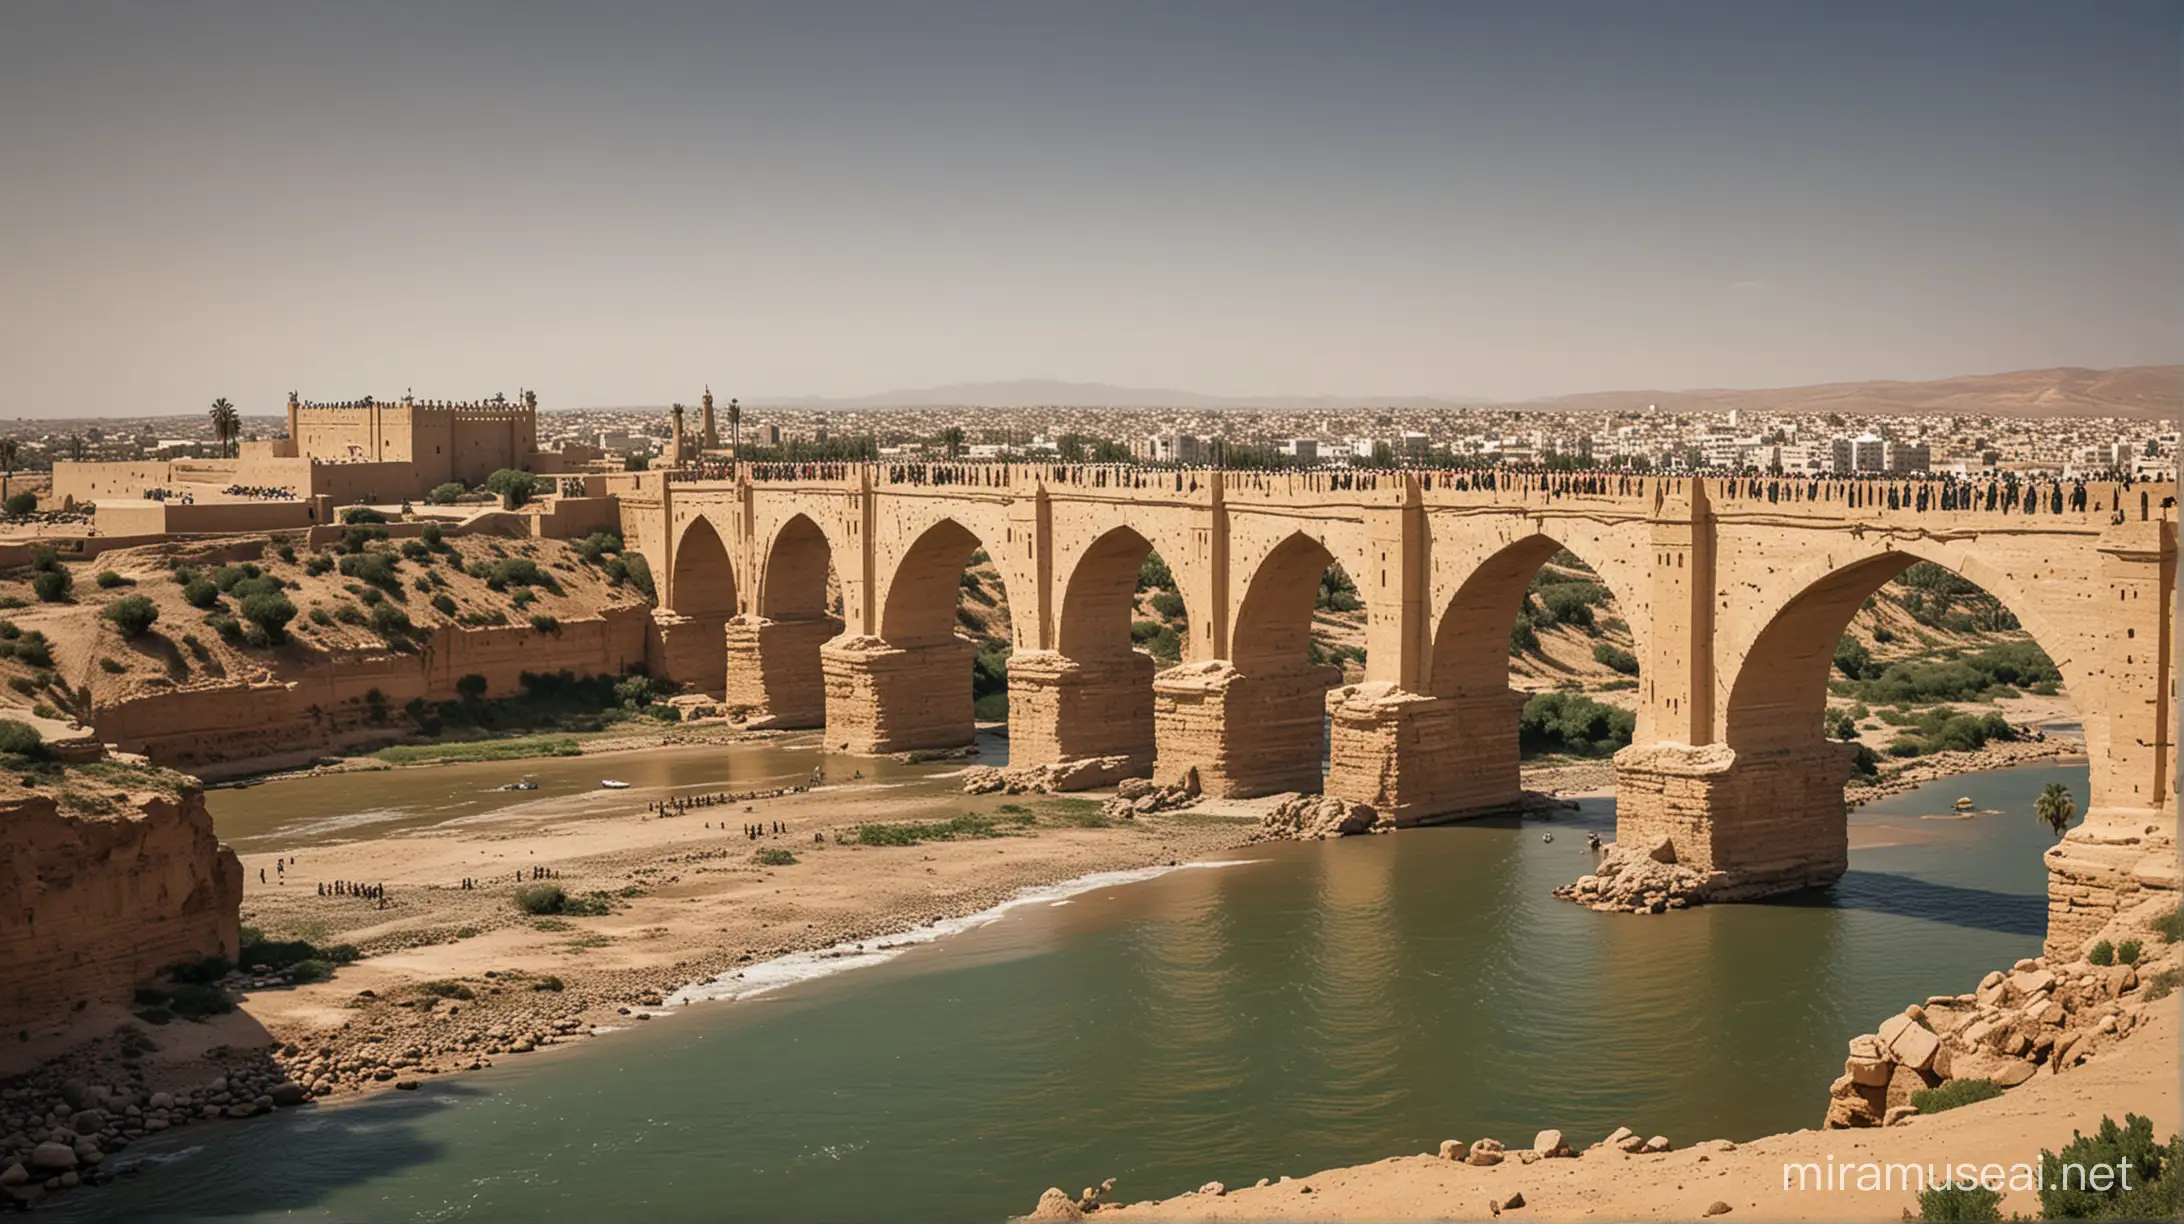 16th Century Qantara Bridge Moroccan Victory at the Battle of the Three Kings